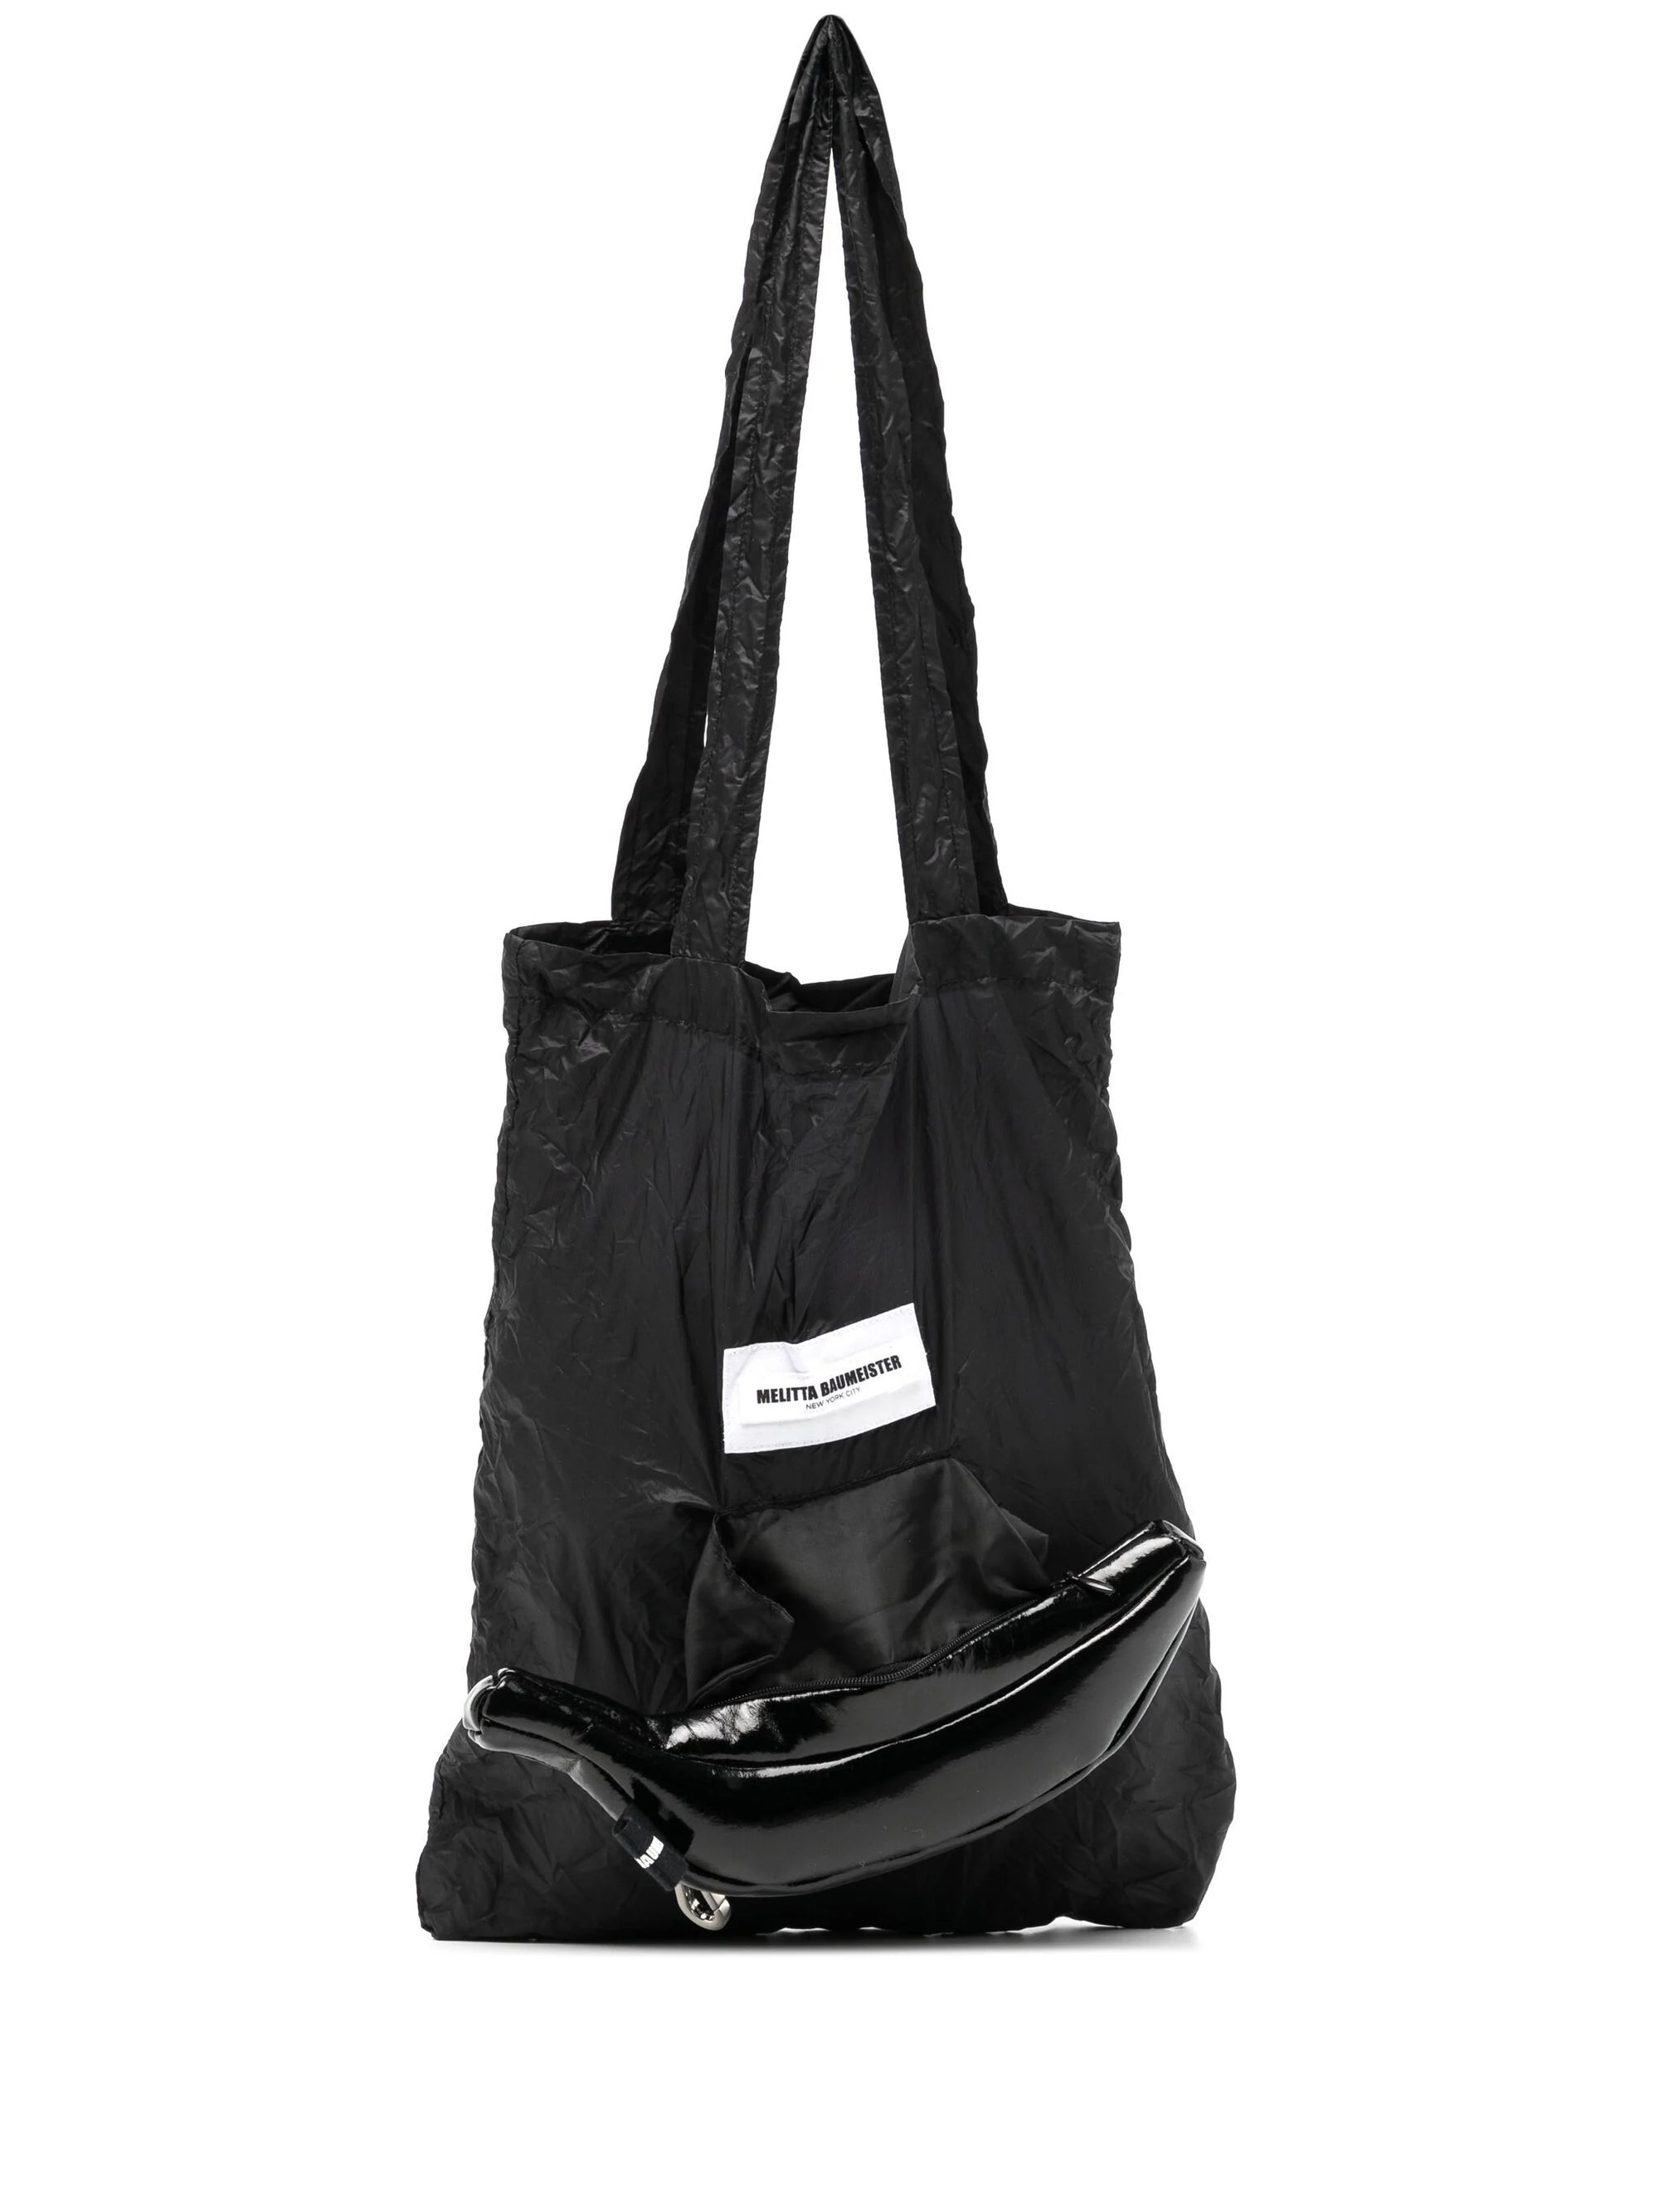 black-glossy-banana-shaped-bag-with-silver-key-ring-and-logo-tag-unzipped-tote-bag-revealed-black-nylon